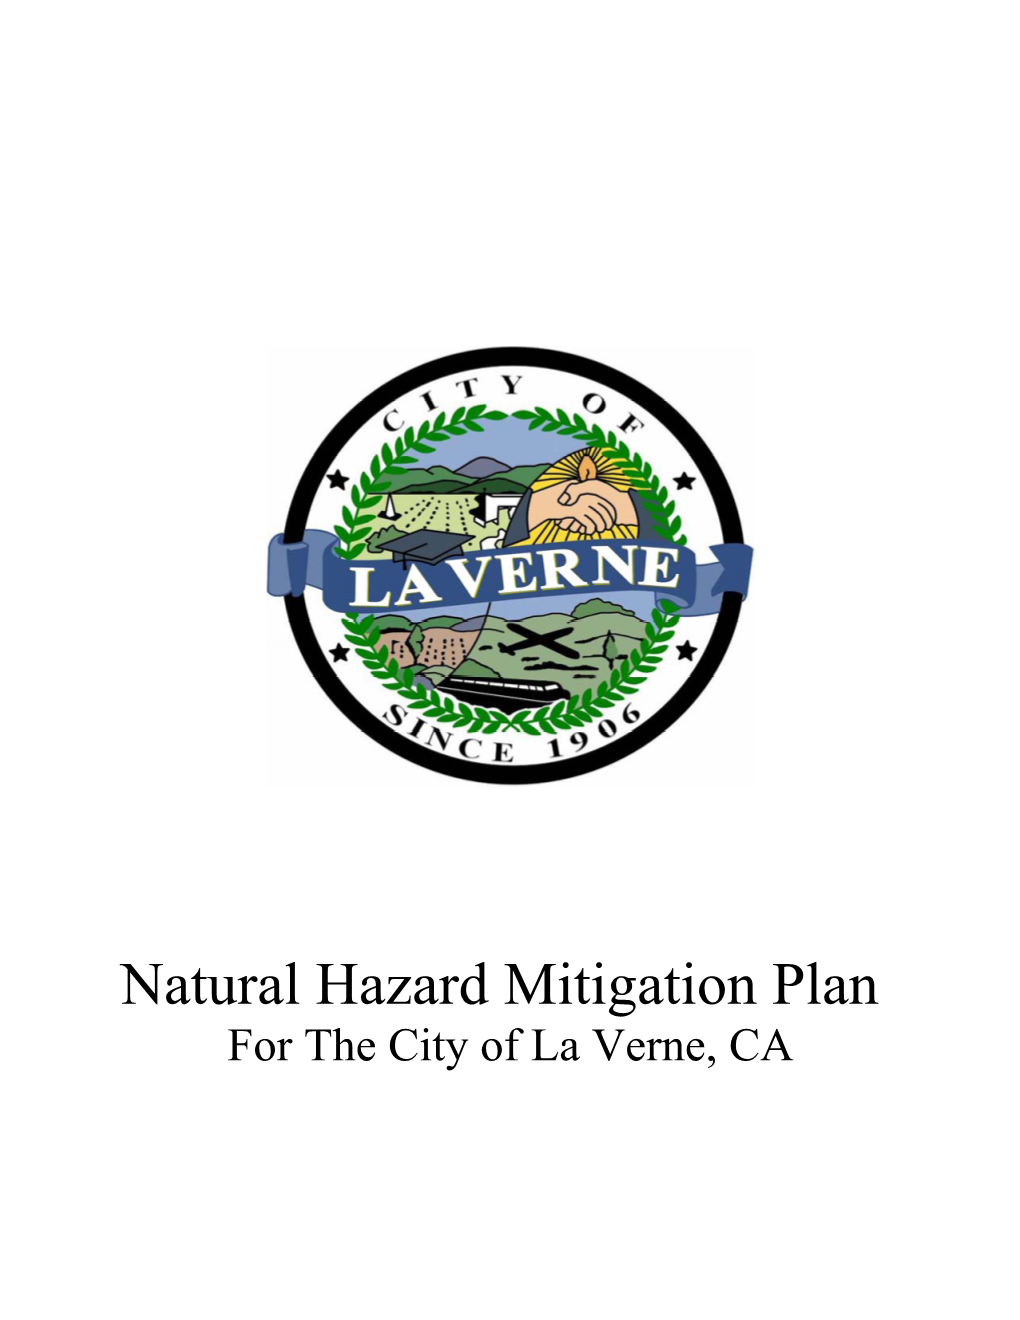 Natural Hazard Mitigation Plan for the City of La Verne, CA